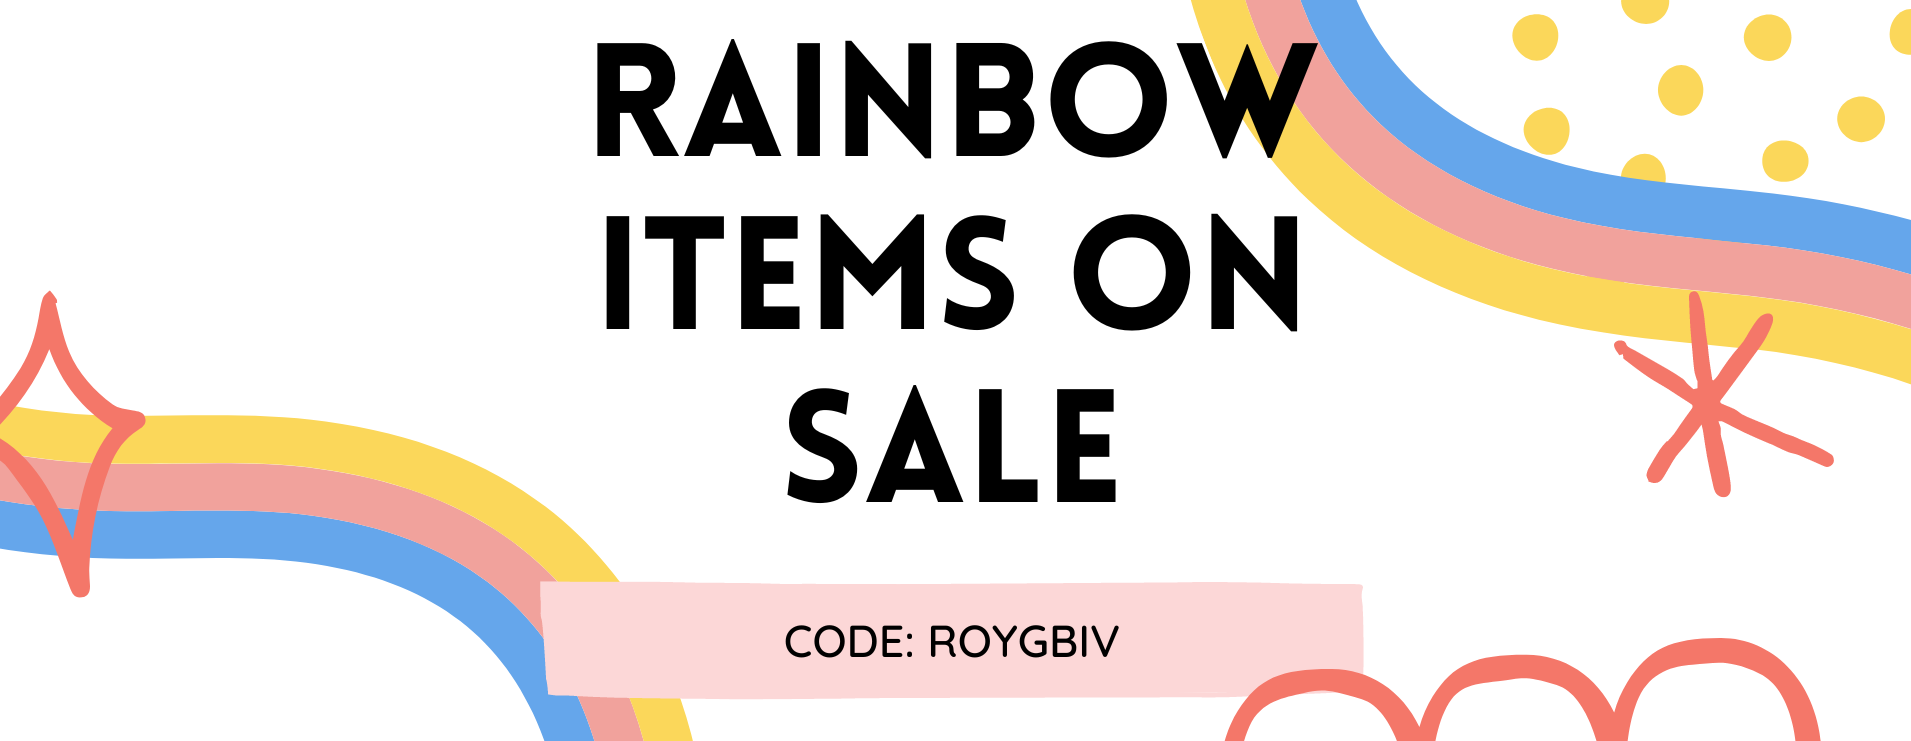 rainbow items on sale. code: roygbiv